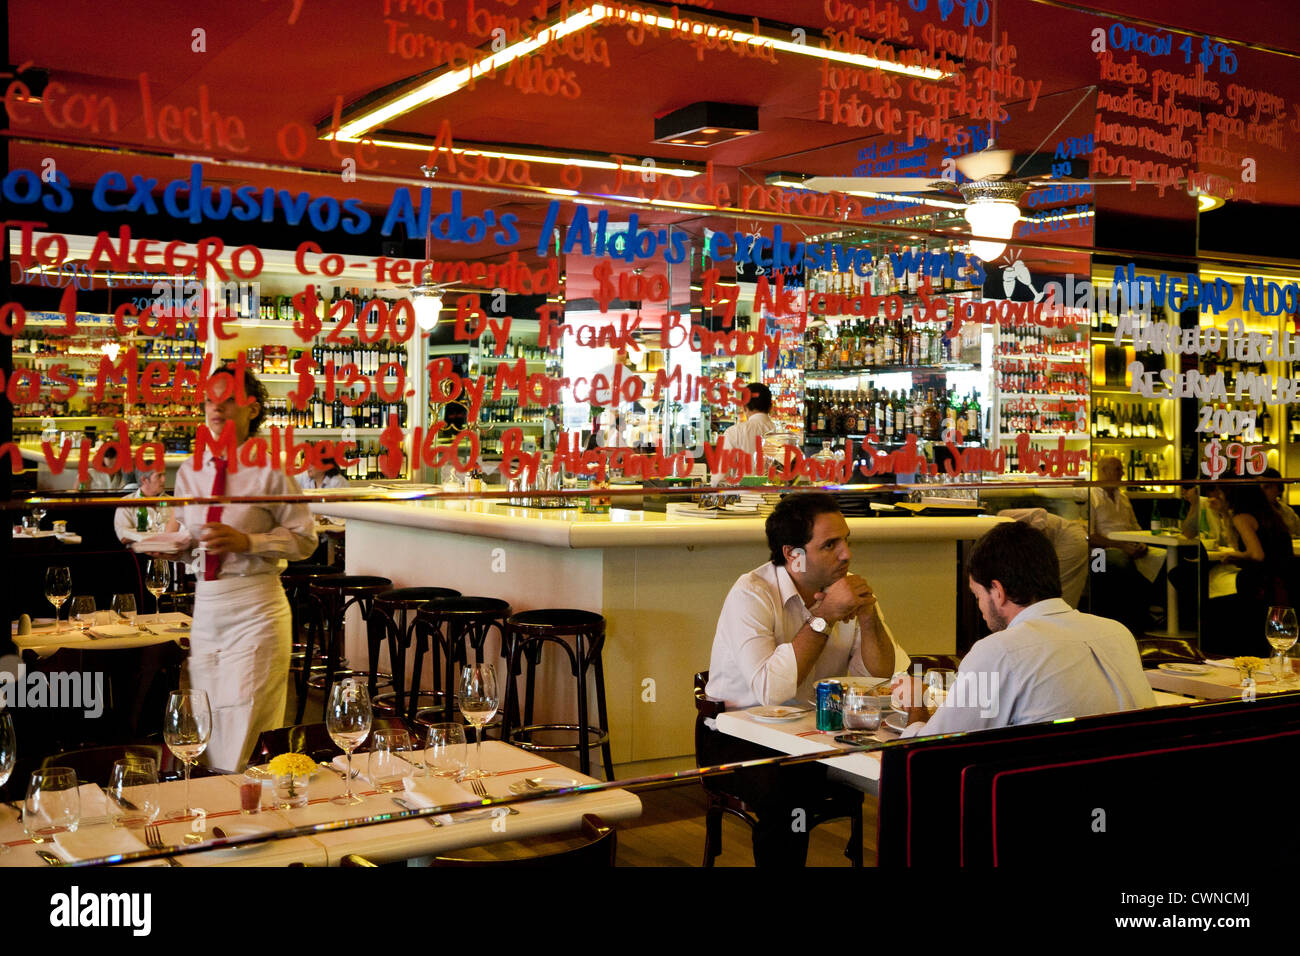 Aldo's Vinoteca bar and restaurant, San Telmo, Buenos Aires, Argentina. Stock Photo